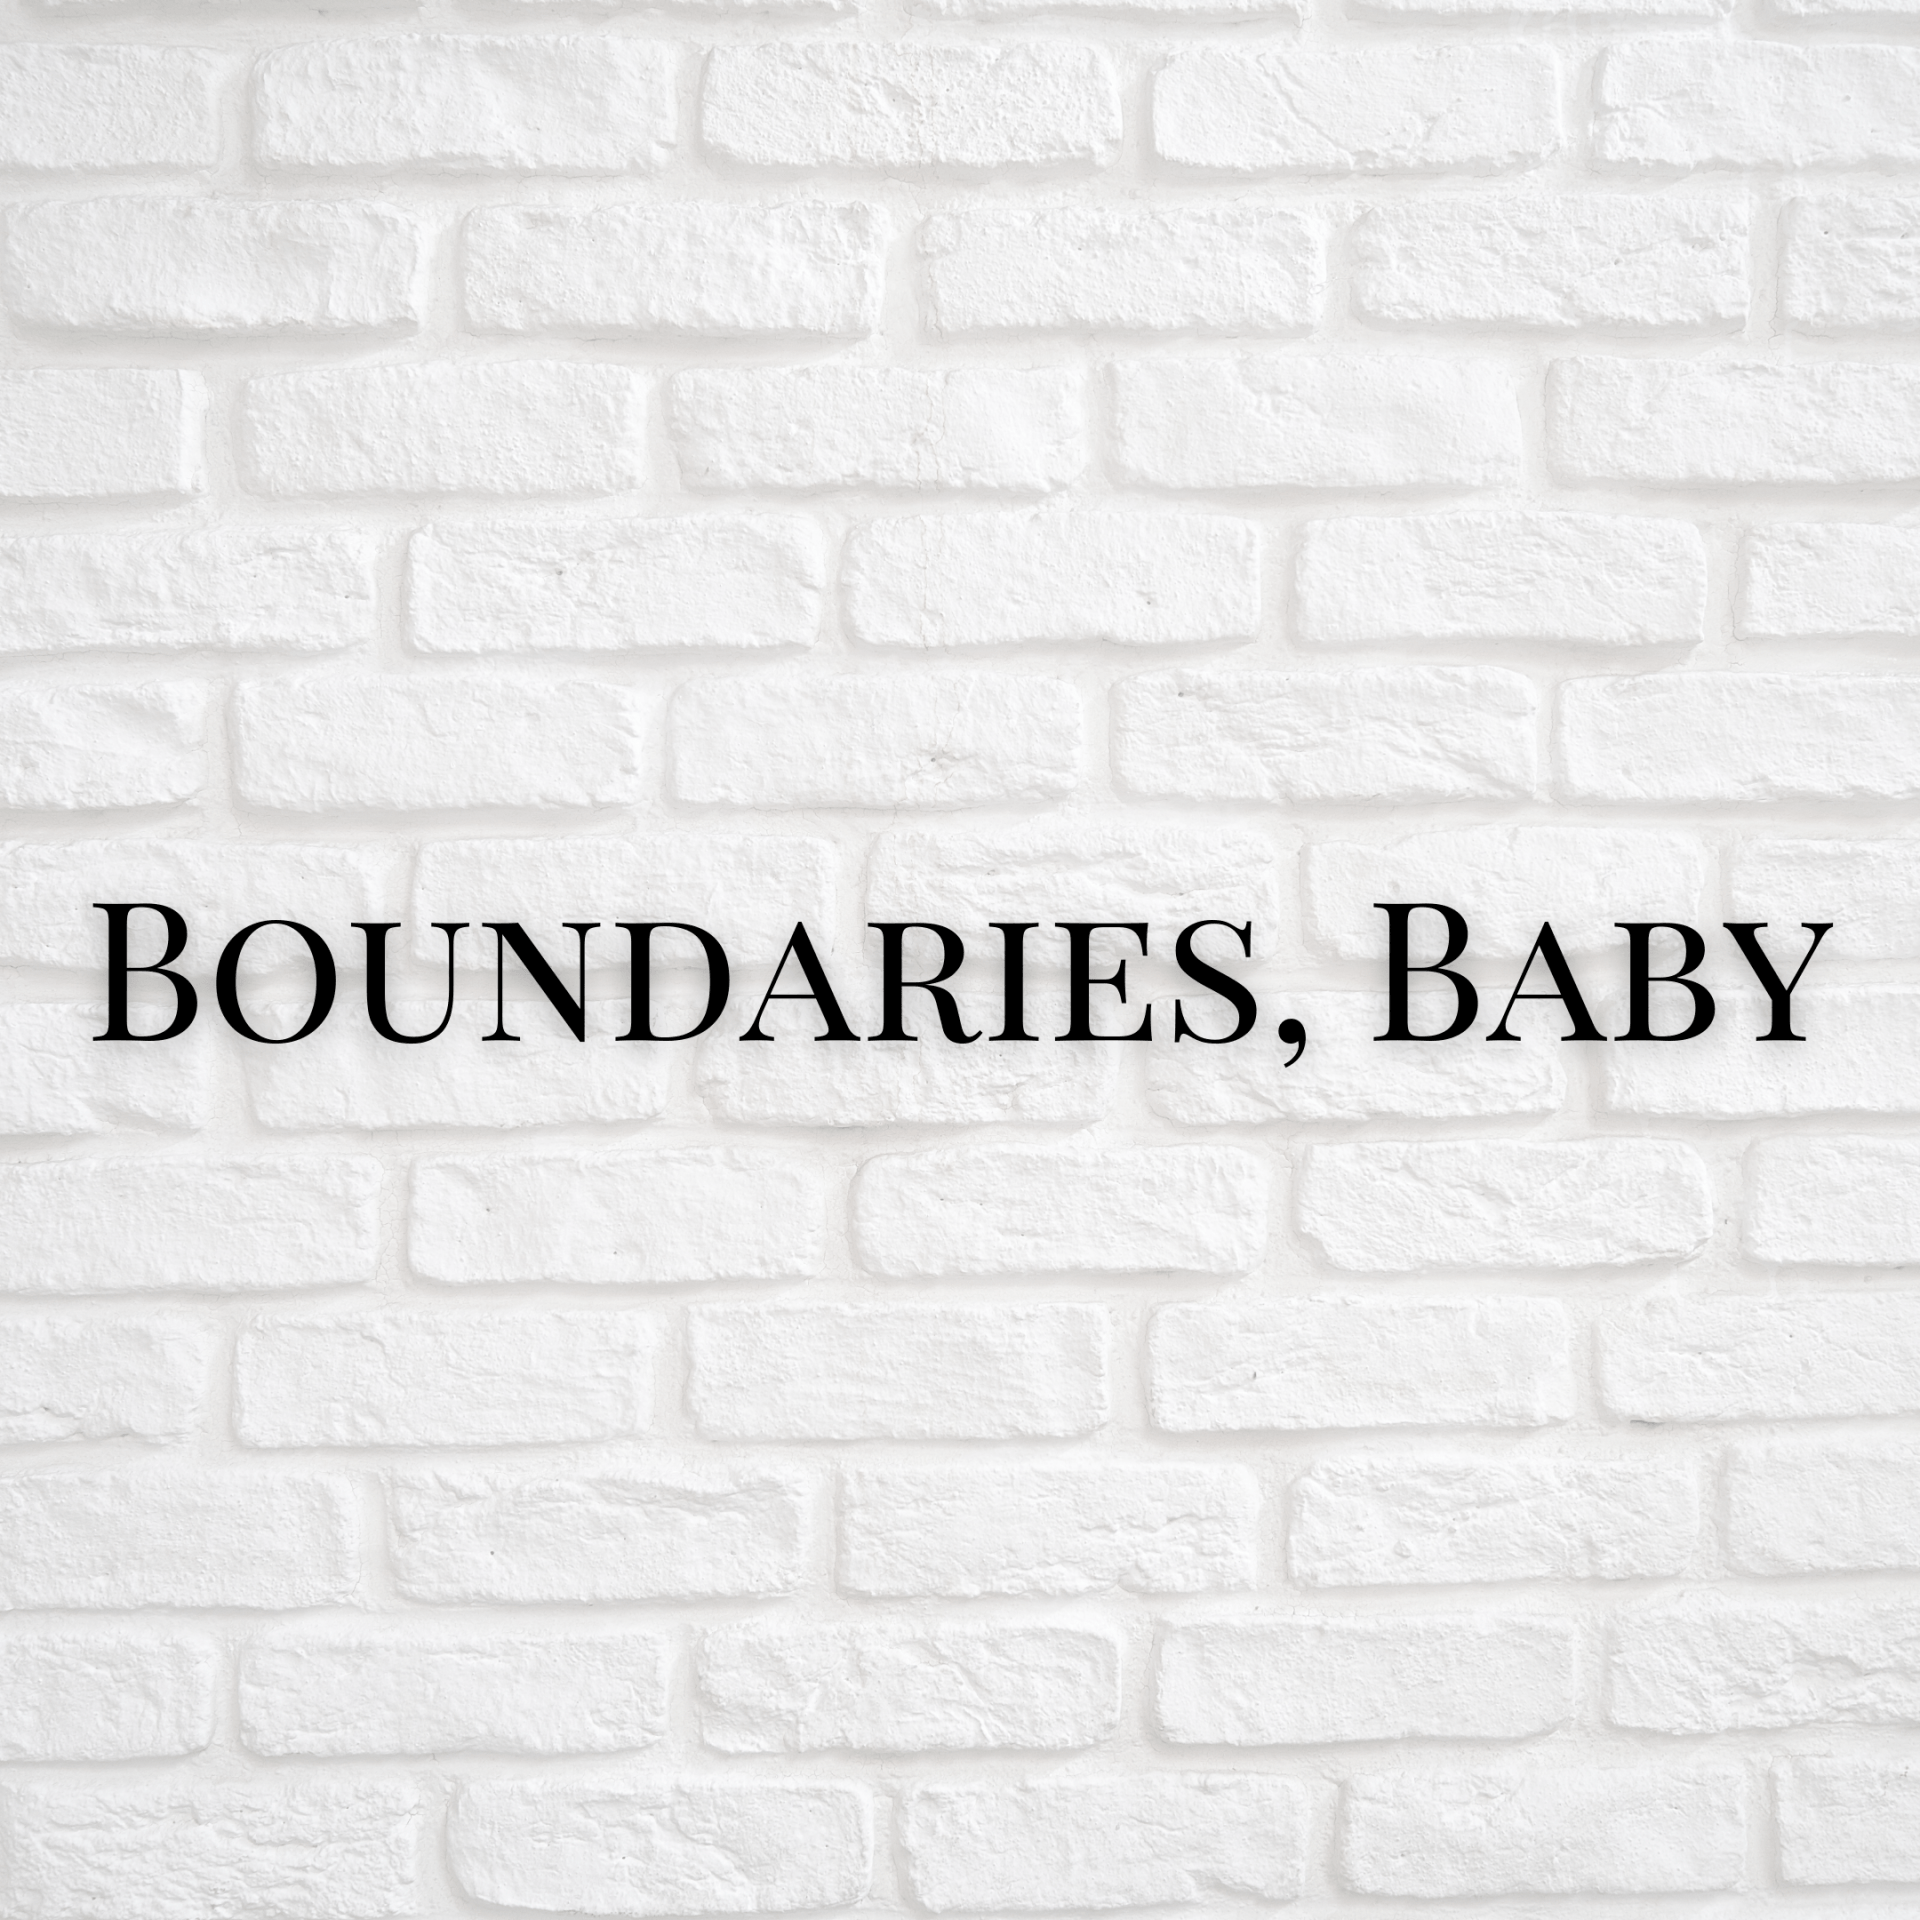 Boundaries, Baby